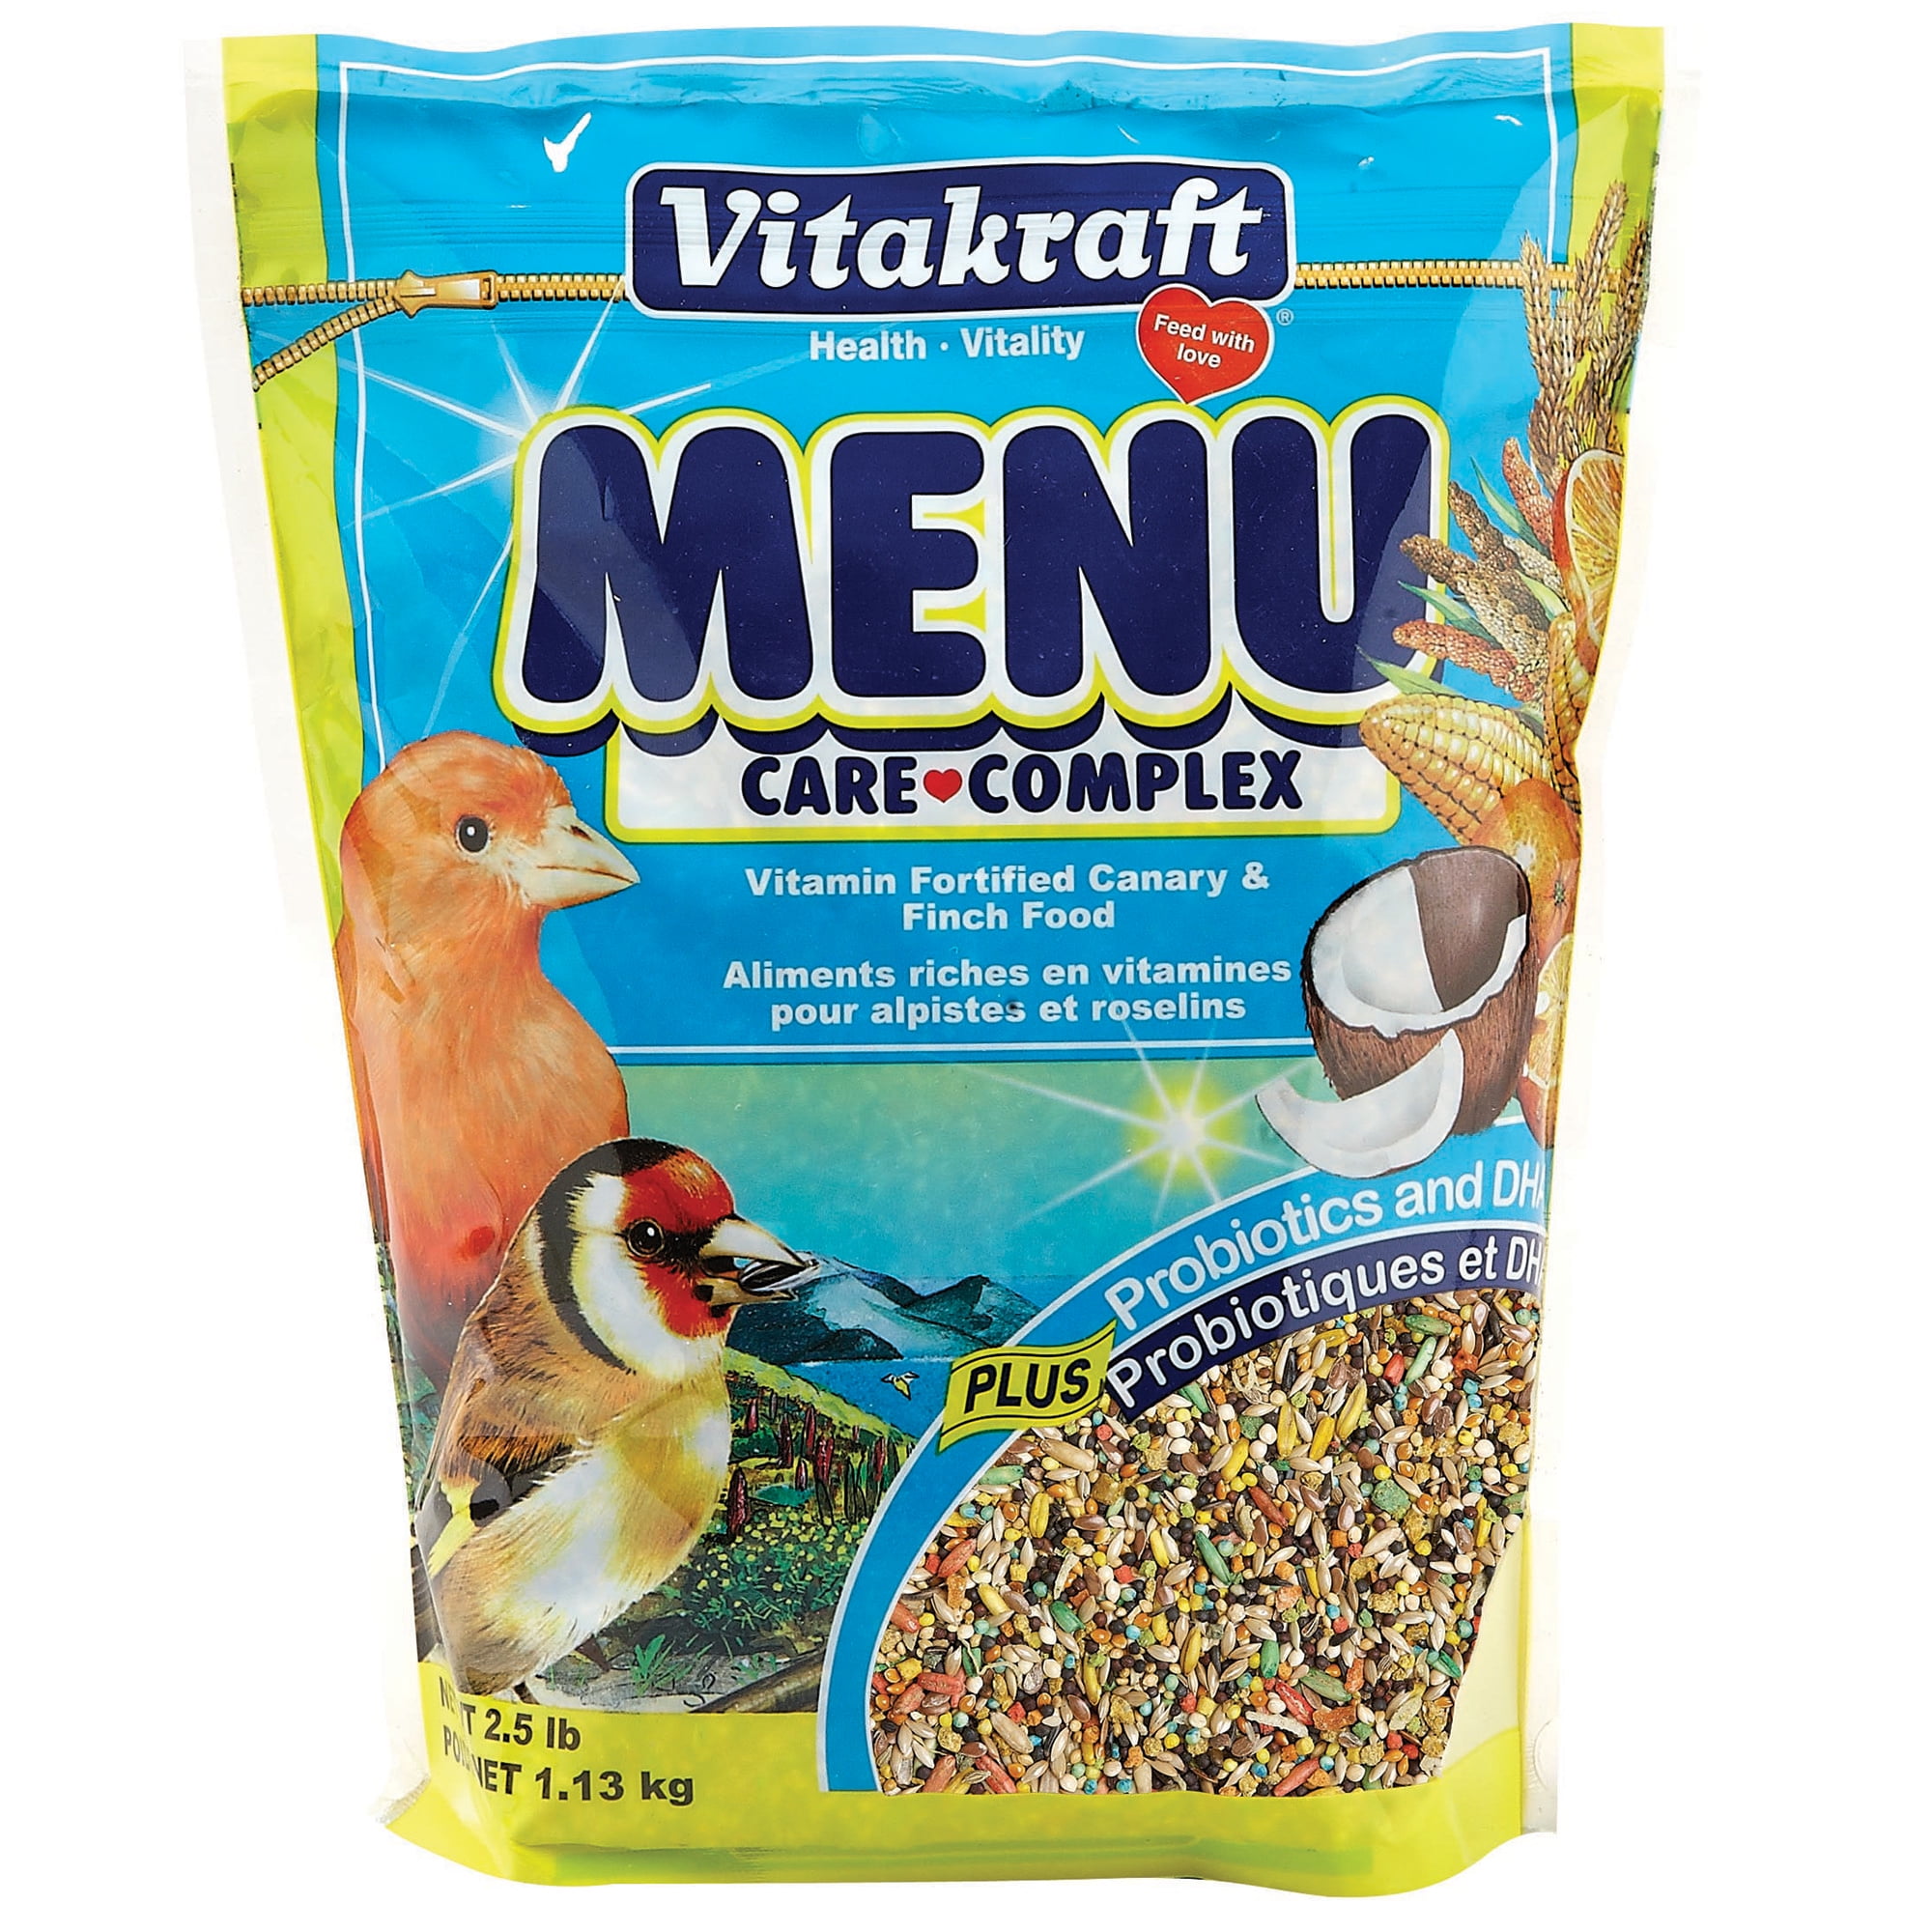 Vitakraft Menu Premium Rabbit Food - Alfalfa Pellets Blend - Vitamin and  Mineral Fortified, Carrots,Greens,Grains,Fruits, 5 Lb